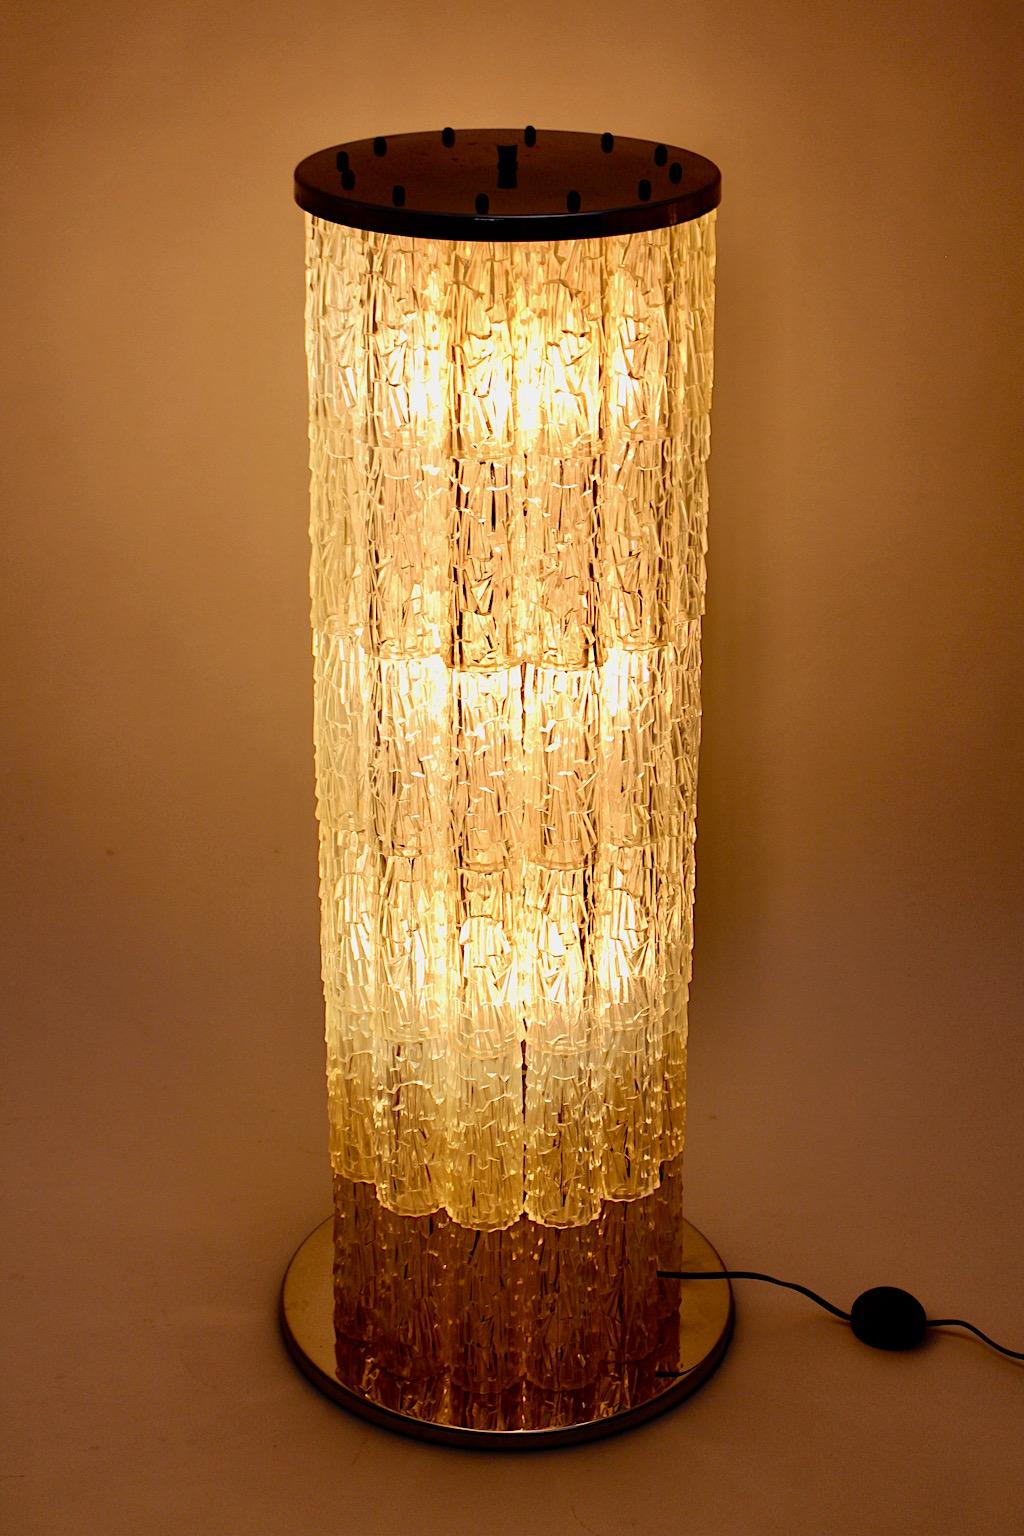 Space Age Chromed Metal Plexiglass Vintage Floor Lamp, 1960s, France For Sale 1